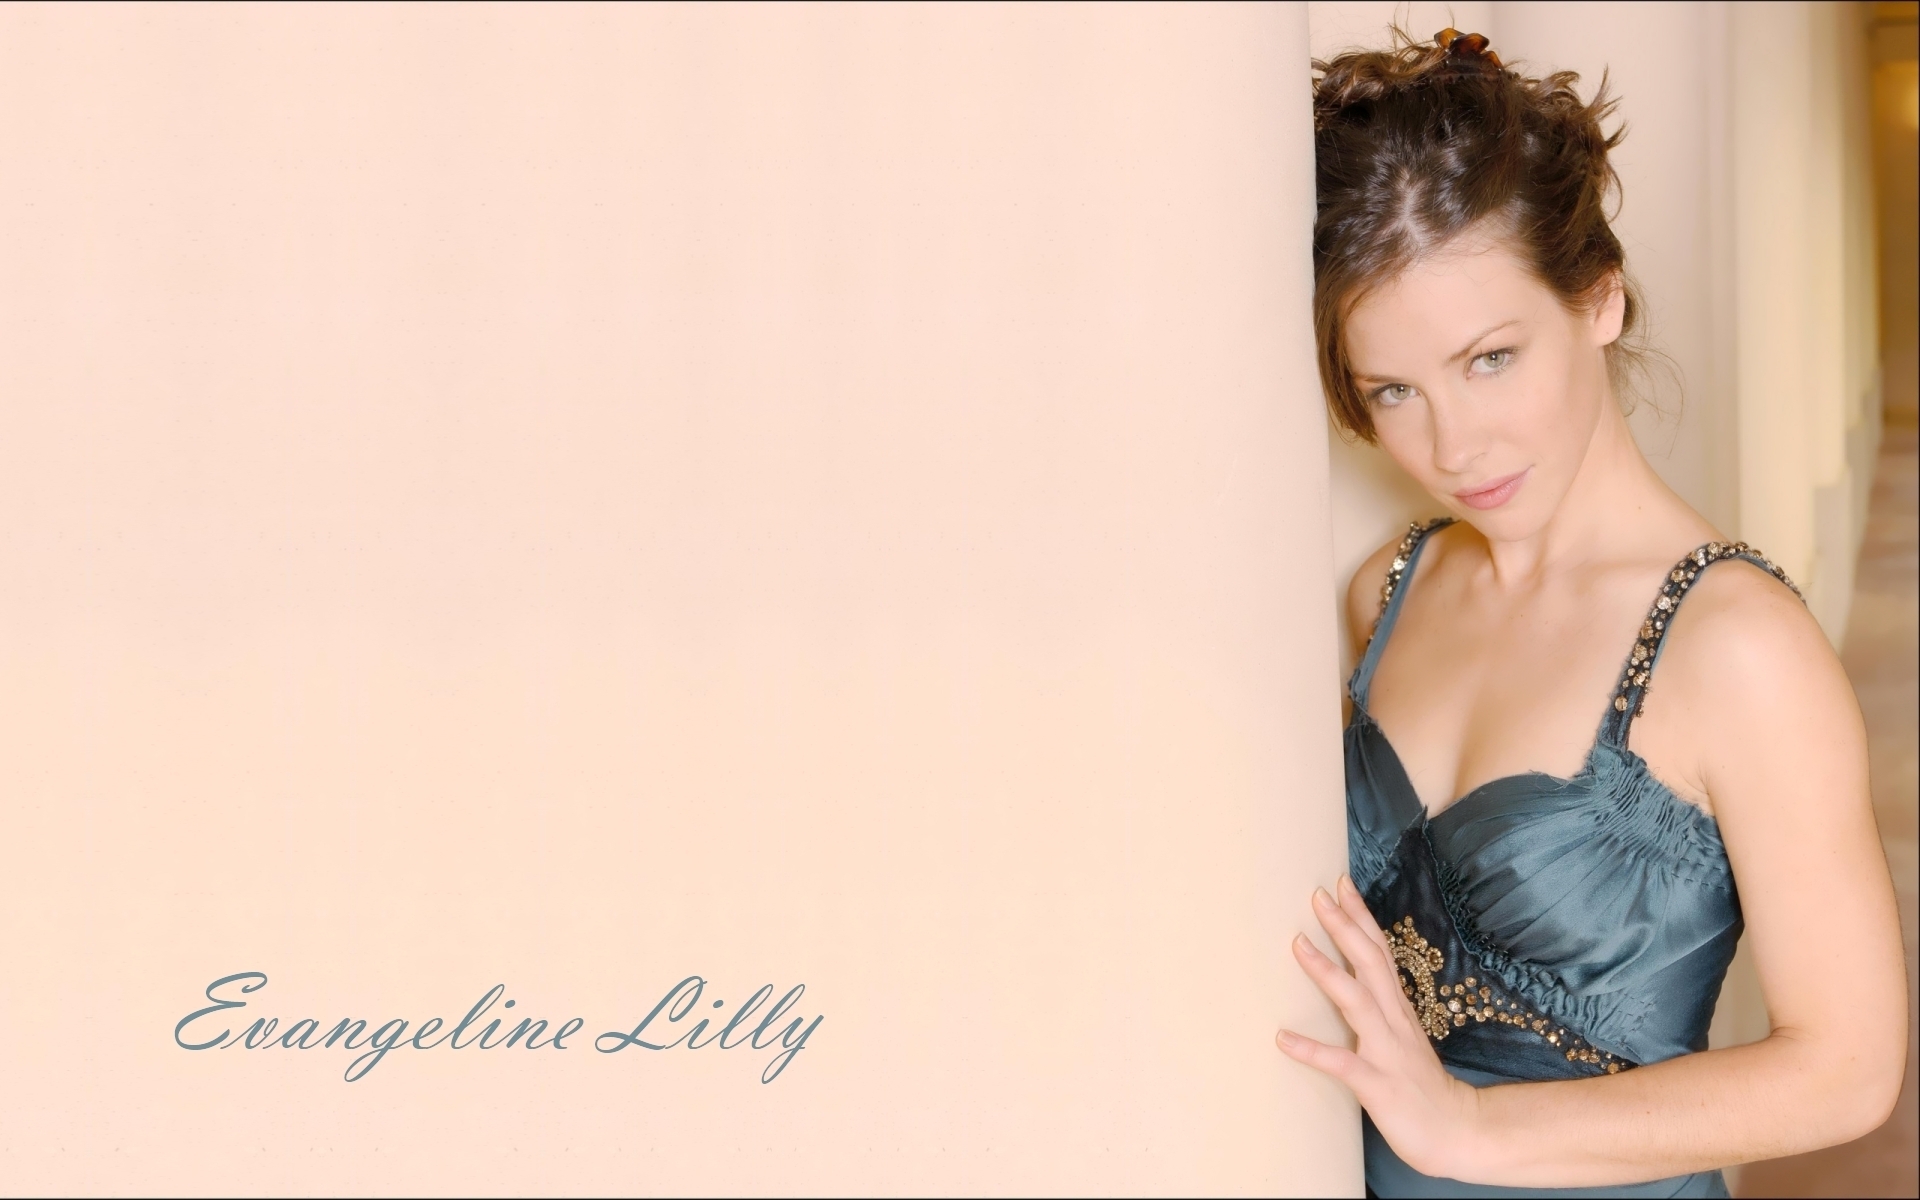 Download mobile wallpaper Celebrity, Evangeline Lilly for free.